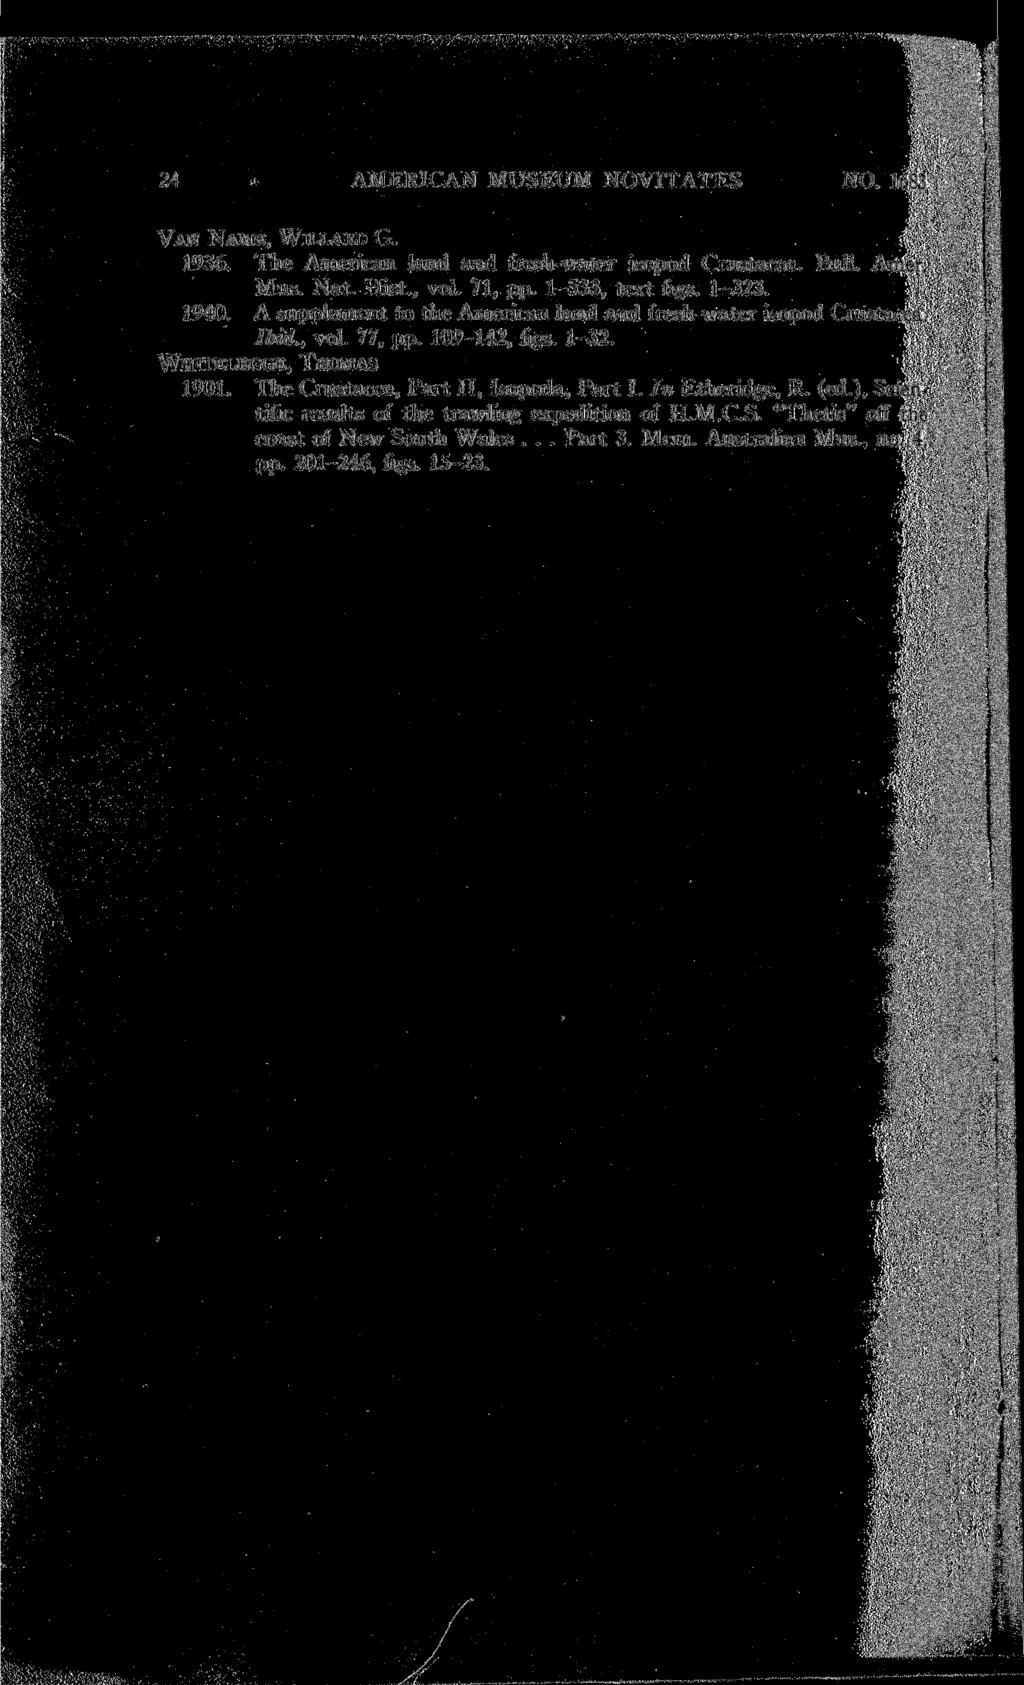 i-mk'. 24 AMERICAN MUSEUM NOVITATES NO. 1683 VAN NAME, WILLARD G. 1936. The American land and fresh-water isopod Crustacea. Bull. Amer. Mus. Nat. Hist., vol. 71, pp. 1-533, text figs. 1-323. 1940.